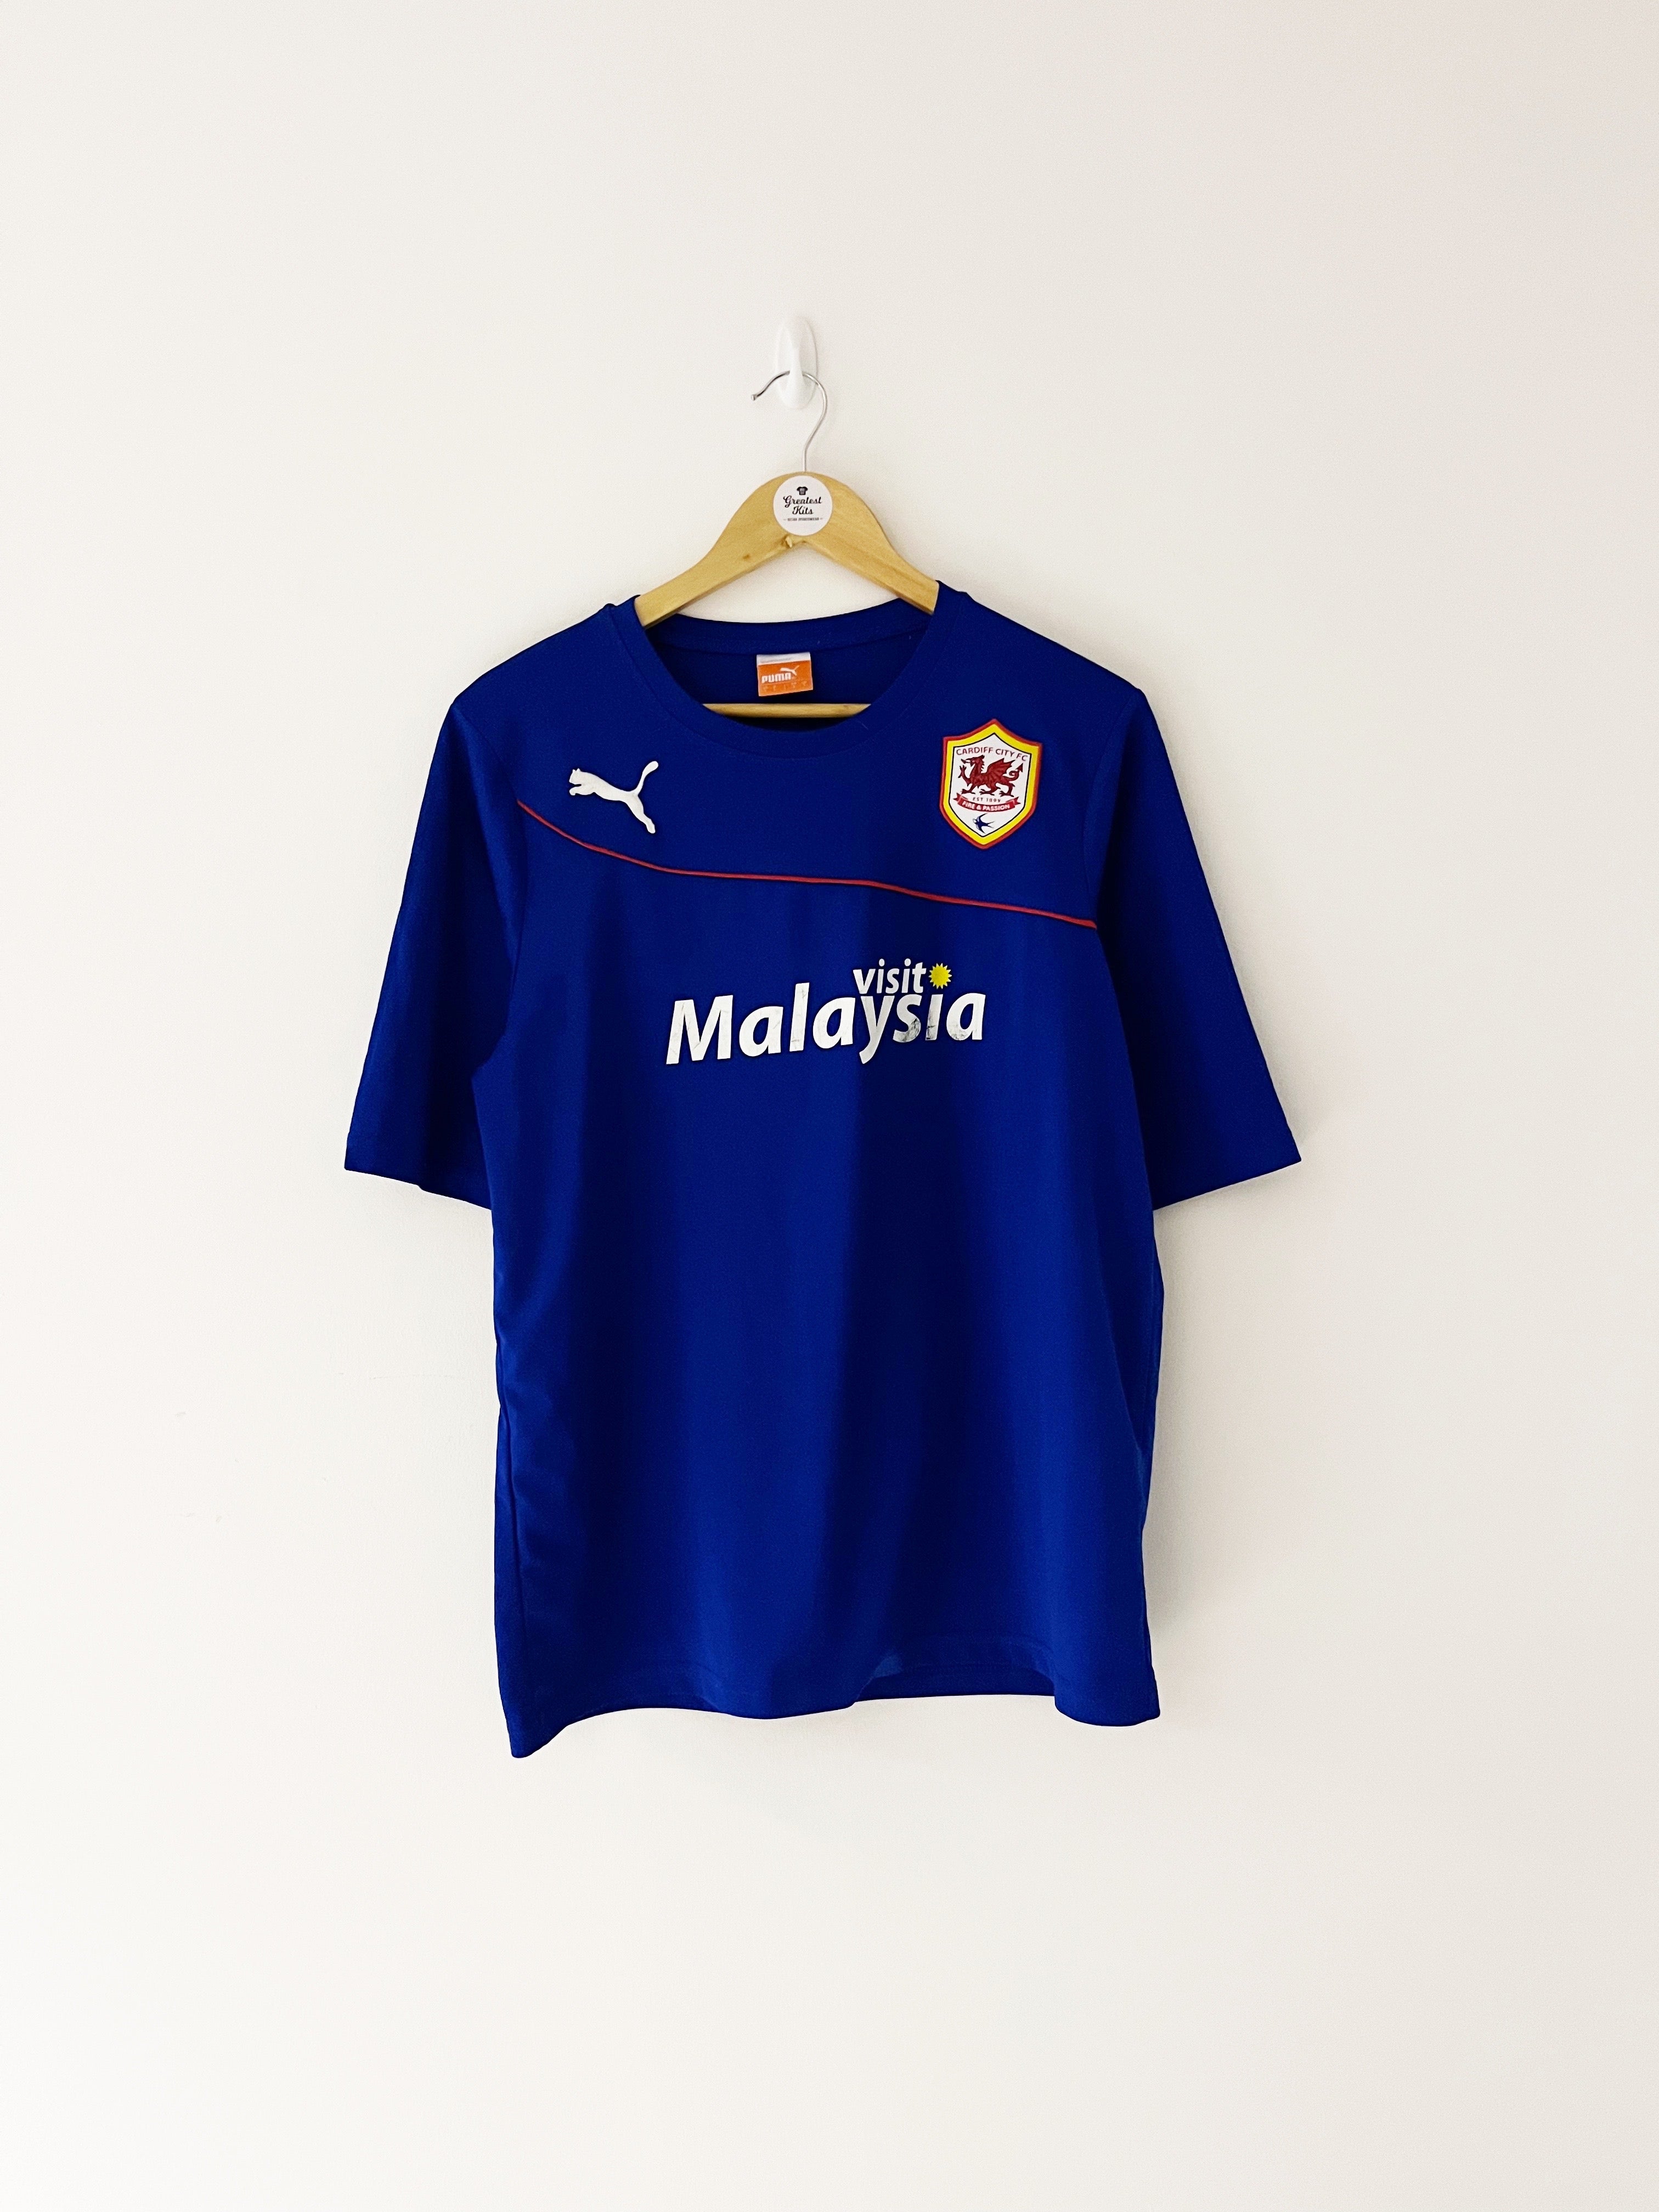 Puma Cardiff City FC Football Shirt Jersey Mens Size L